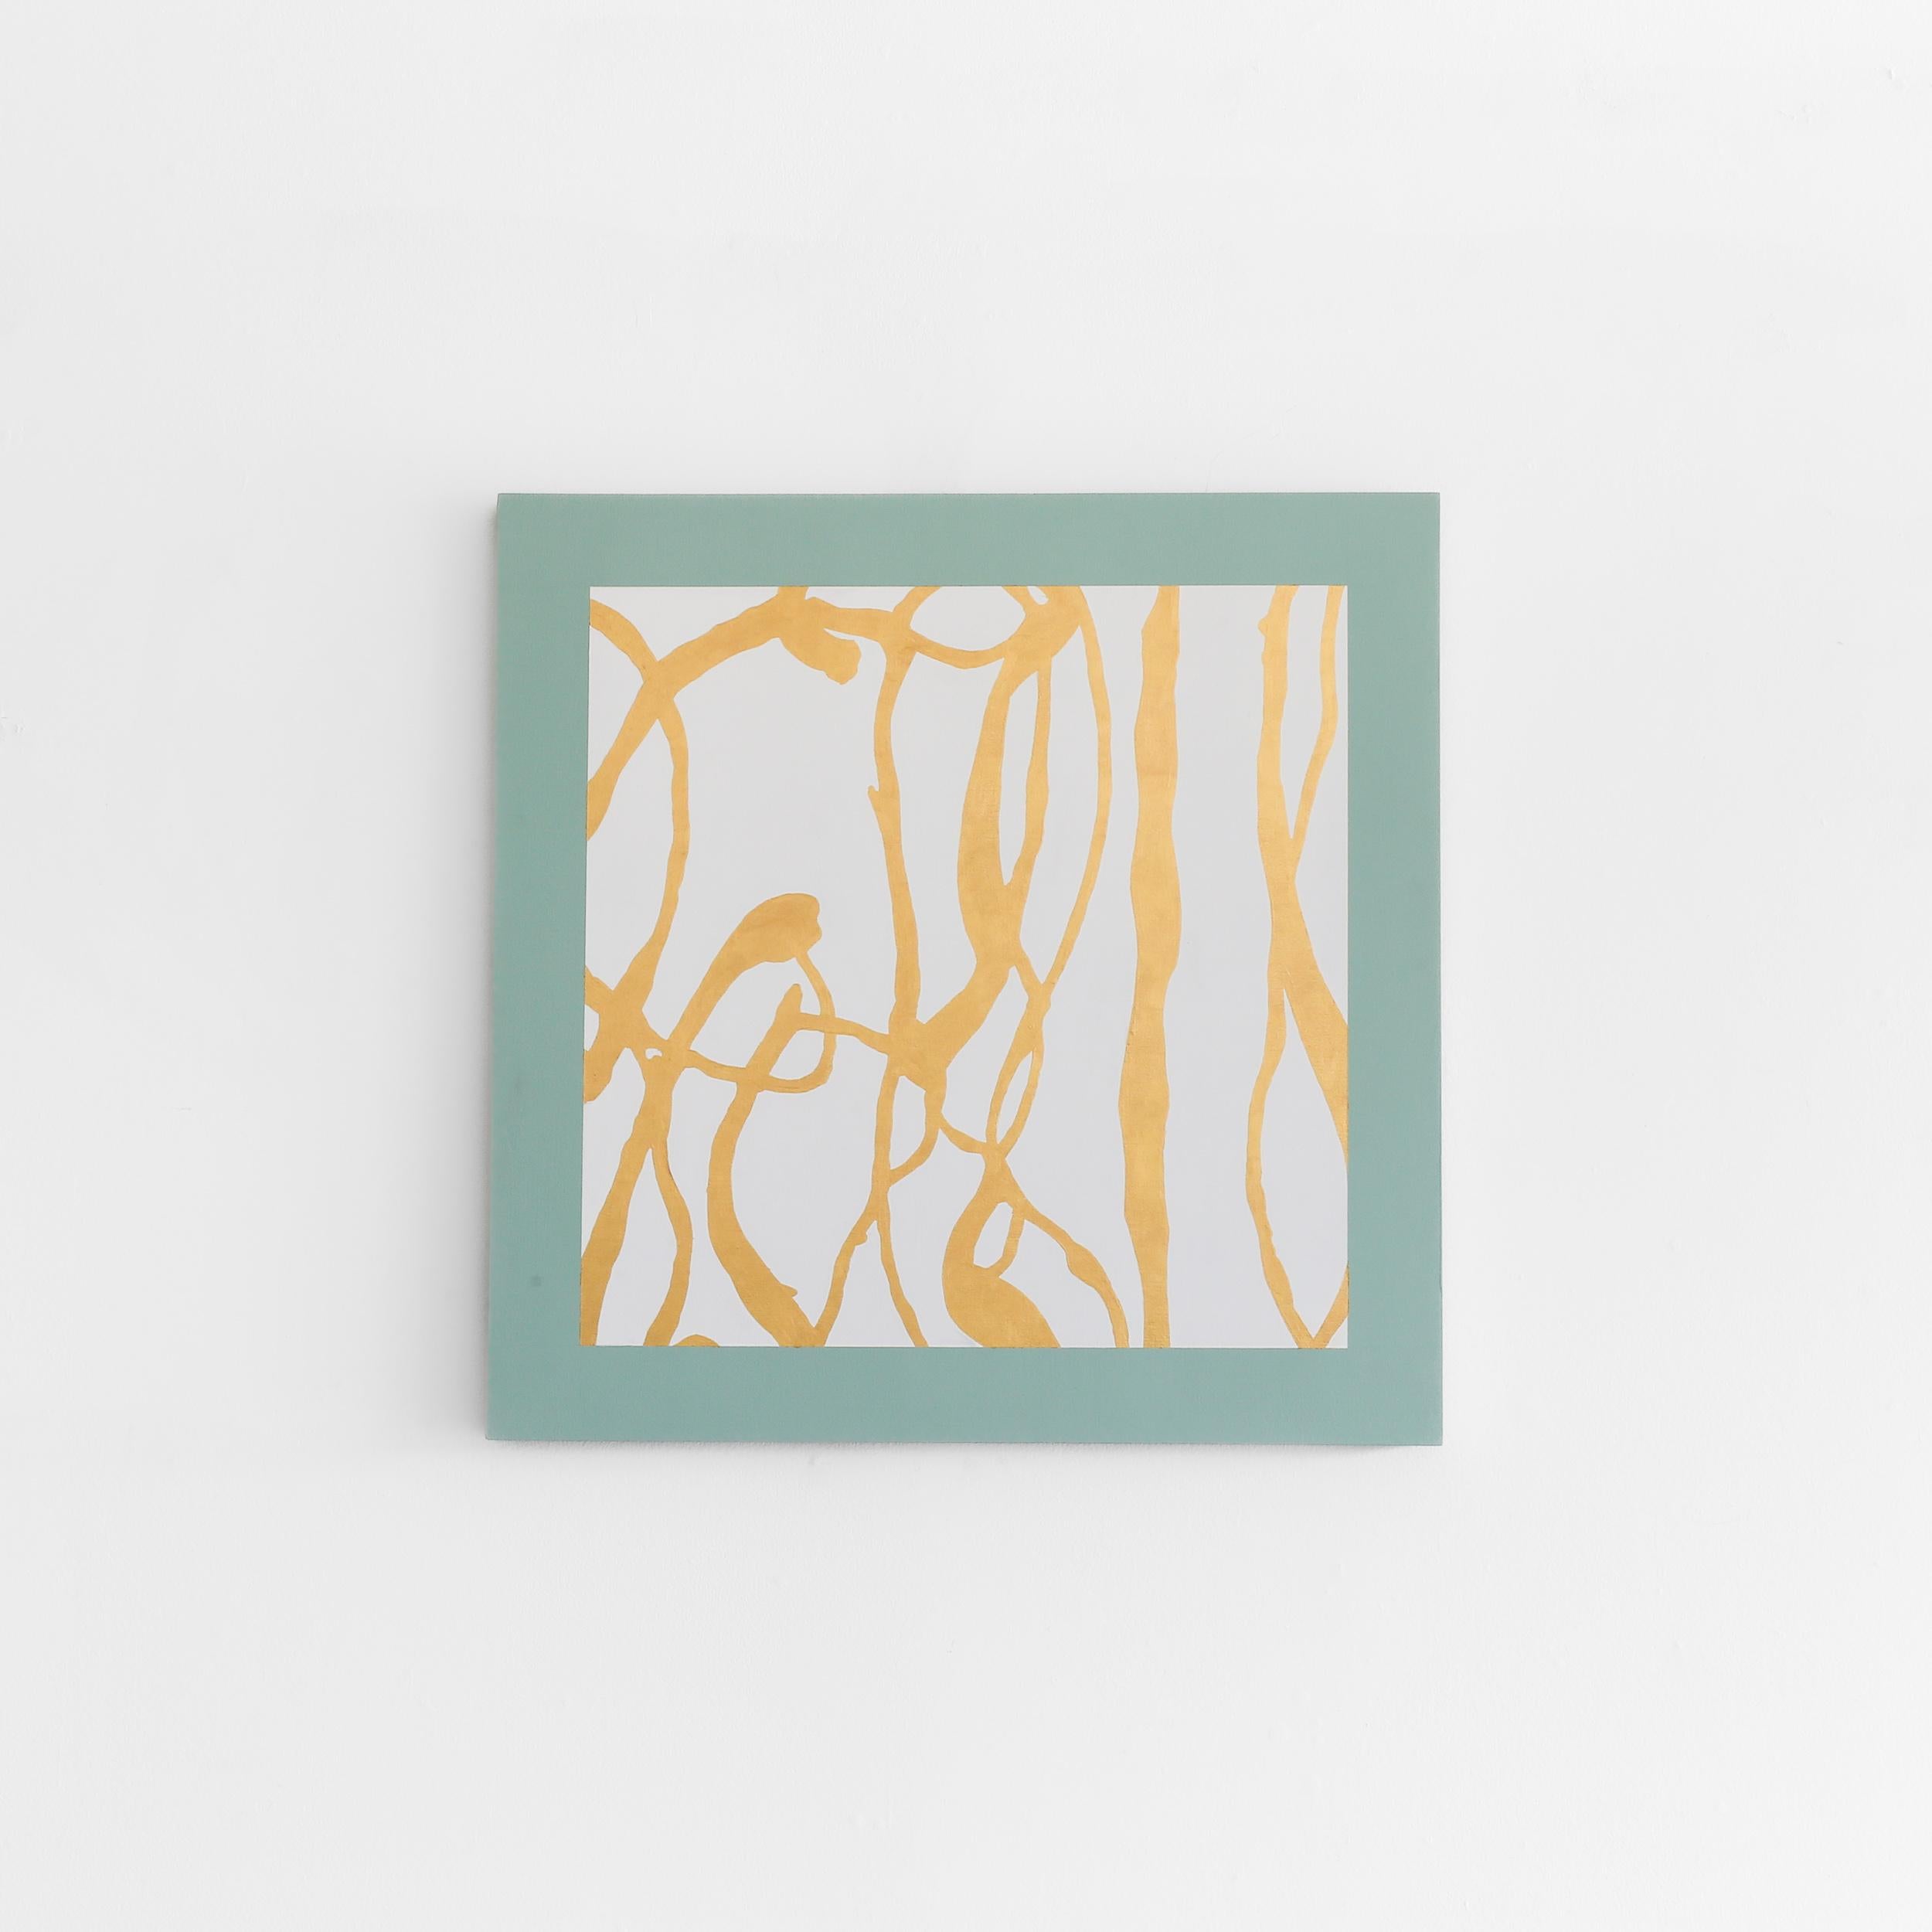 Covington - Bleu avec feuille d'or pur 24 carats - Abstrait Mixed Media Art par Jessica Feldheim